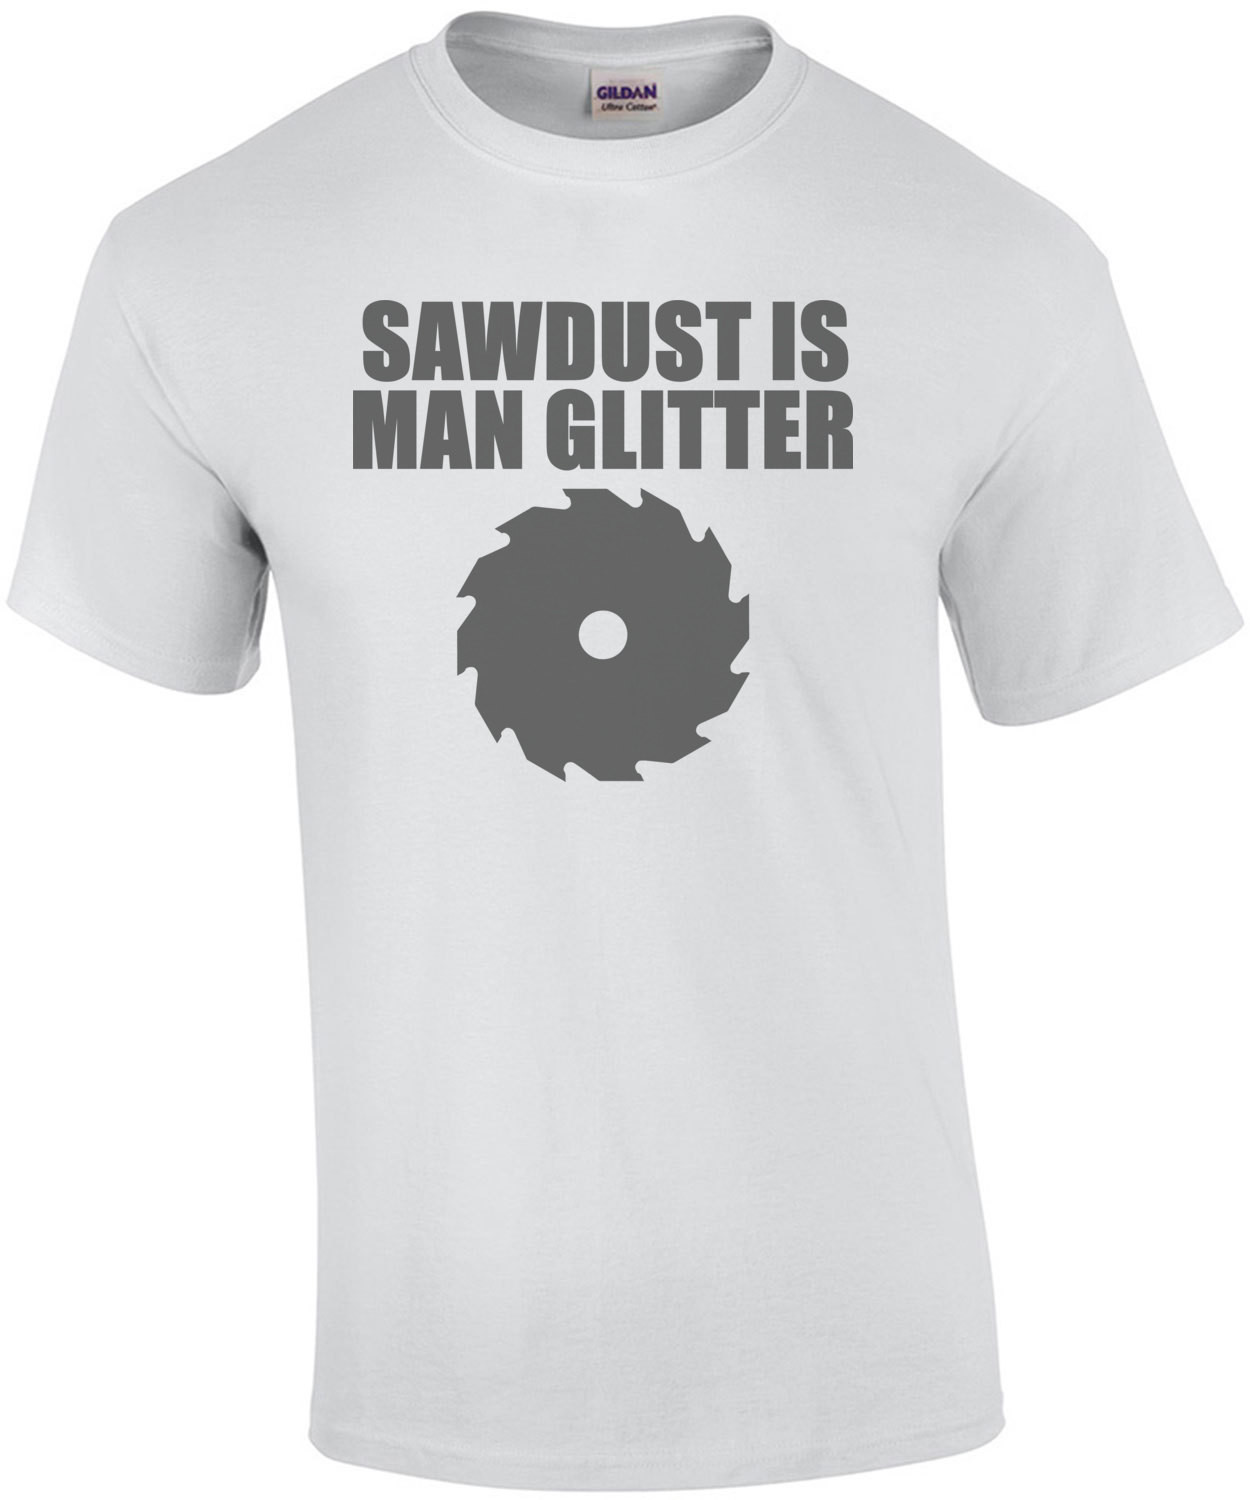 Sawdust is man glitter - funny wood working t-shirt. Carpentry T-Shirt